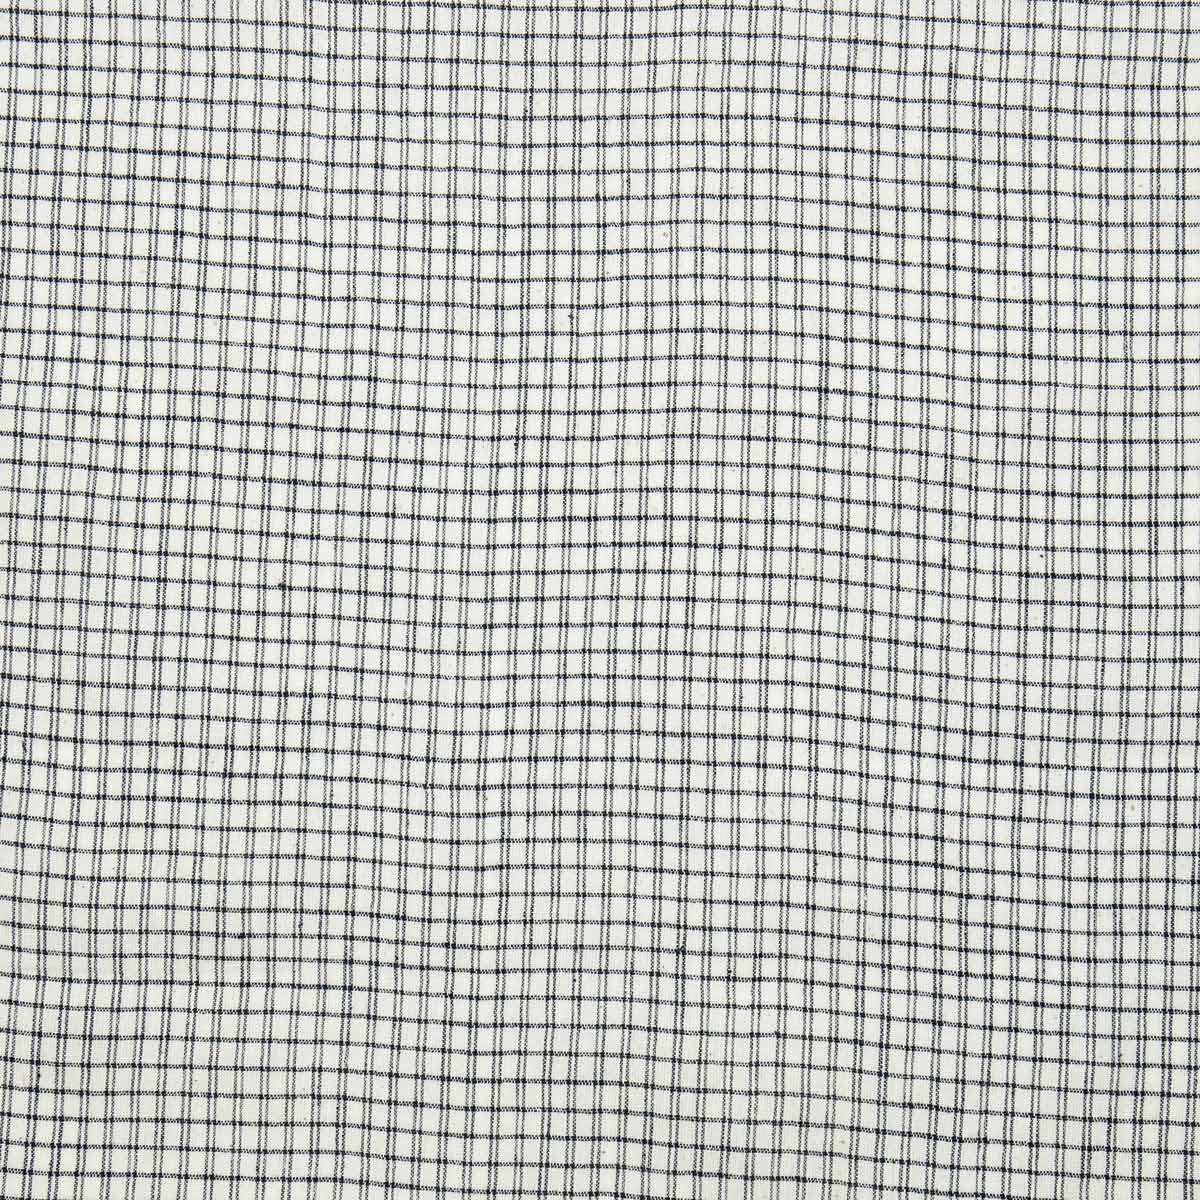 ECO MINIPANE Fabric, white/black